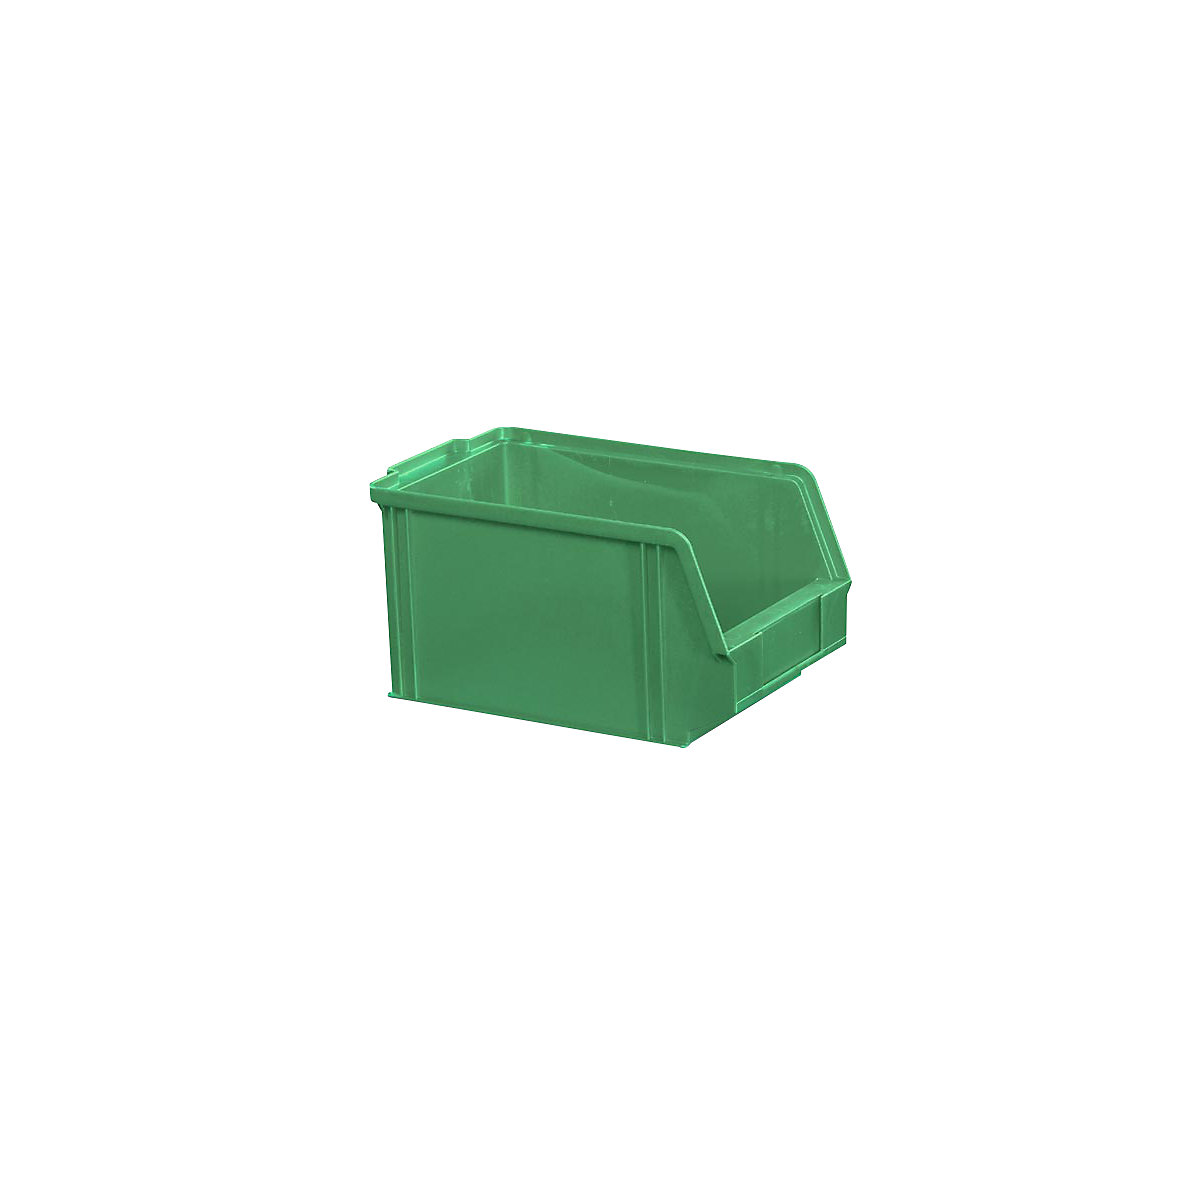 Bac à bec en polystyrène, longueur 230 mm, l x h 146 x 130 mm, lot de 60, vert-9